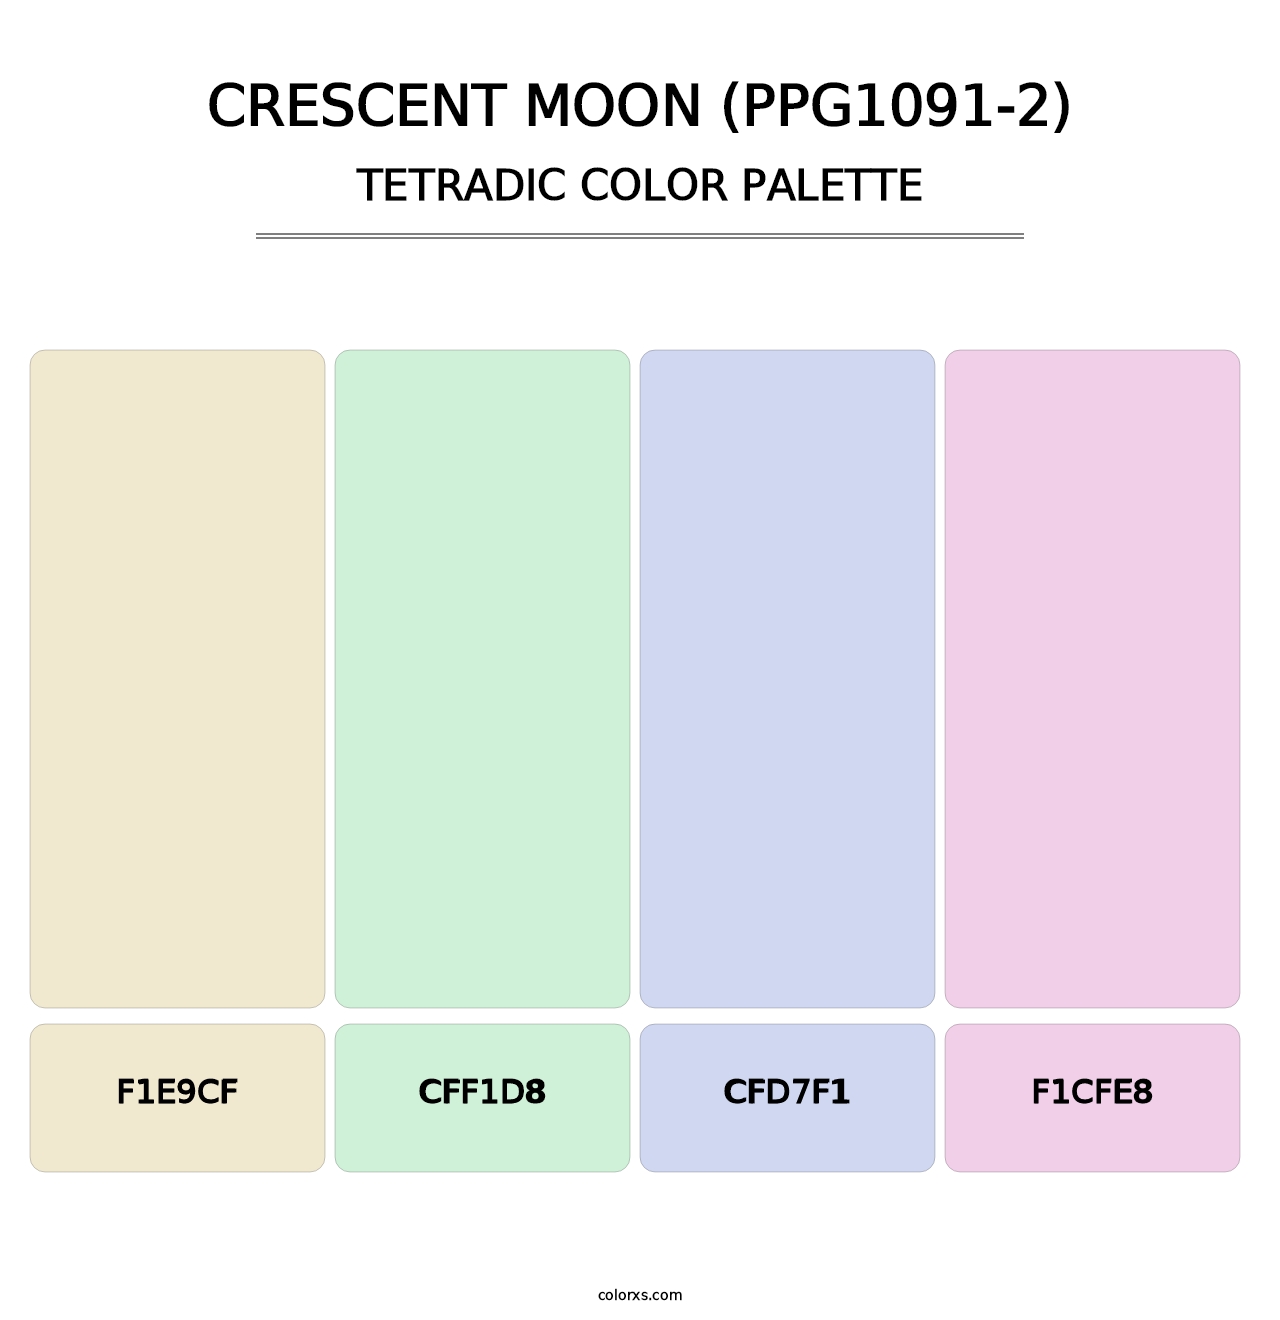 Crescent Moon (PPG1091-2) - Tetradic Color Palette